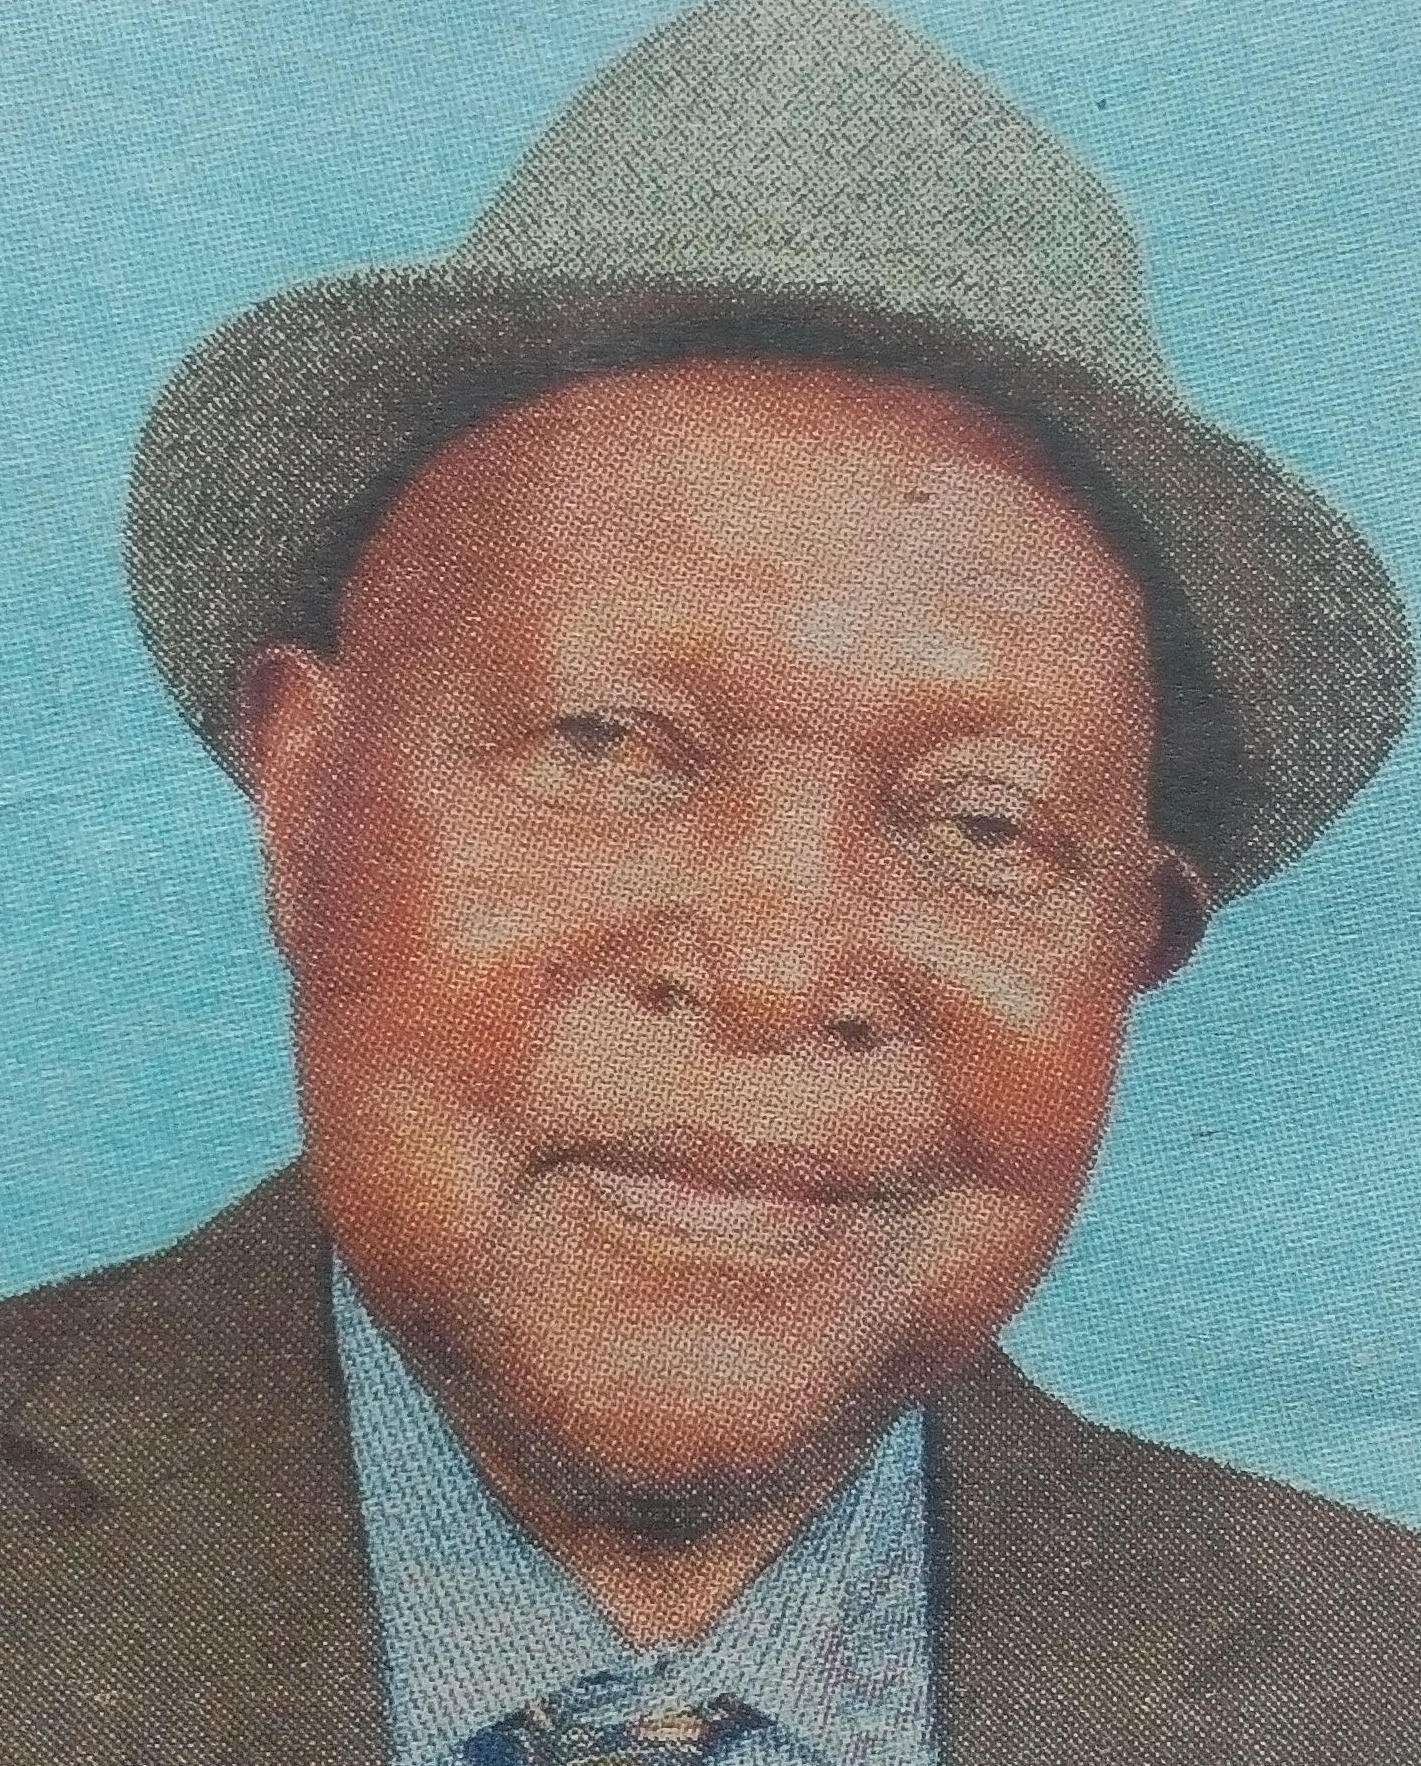 Obituary Image of Japuonj Adams Nyabera